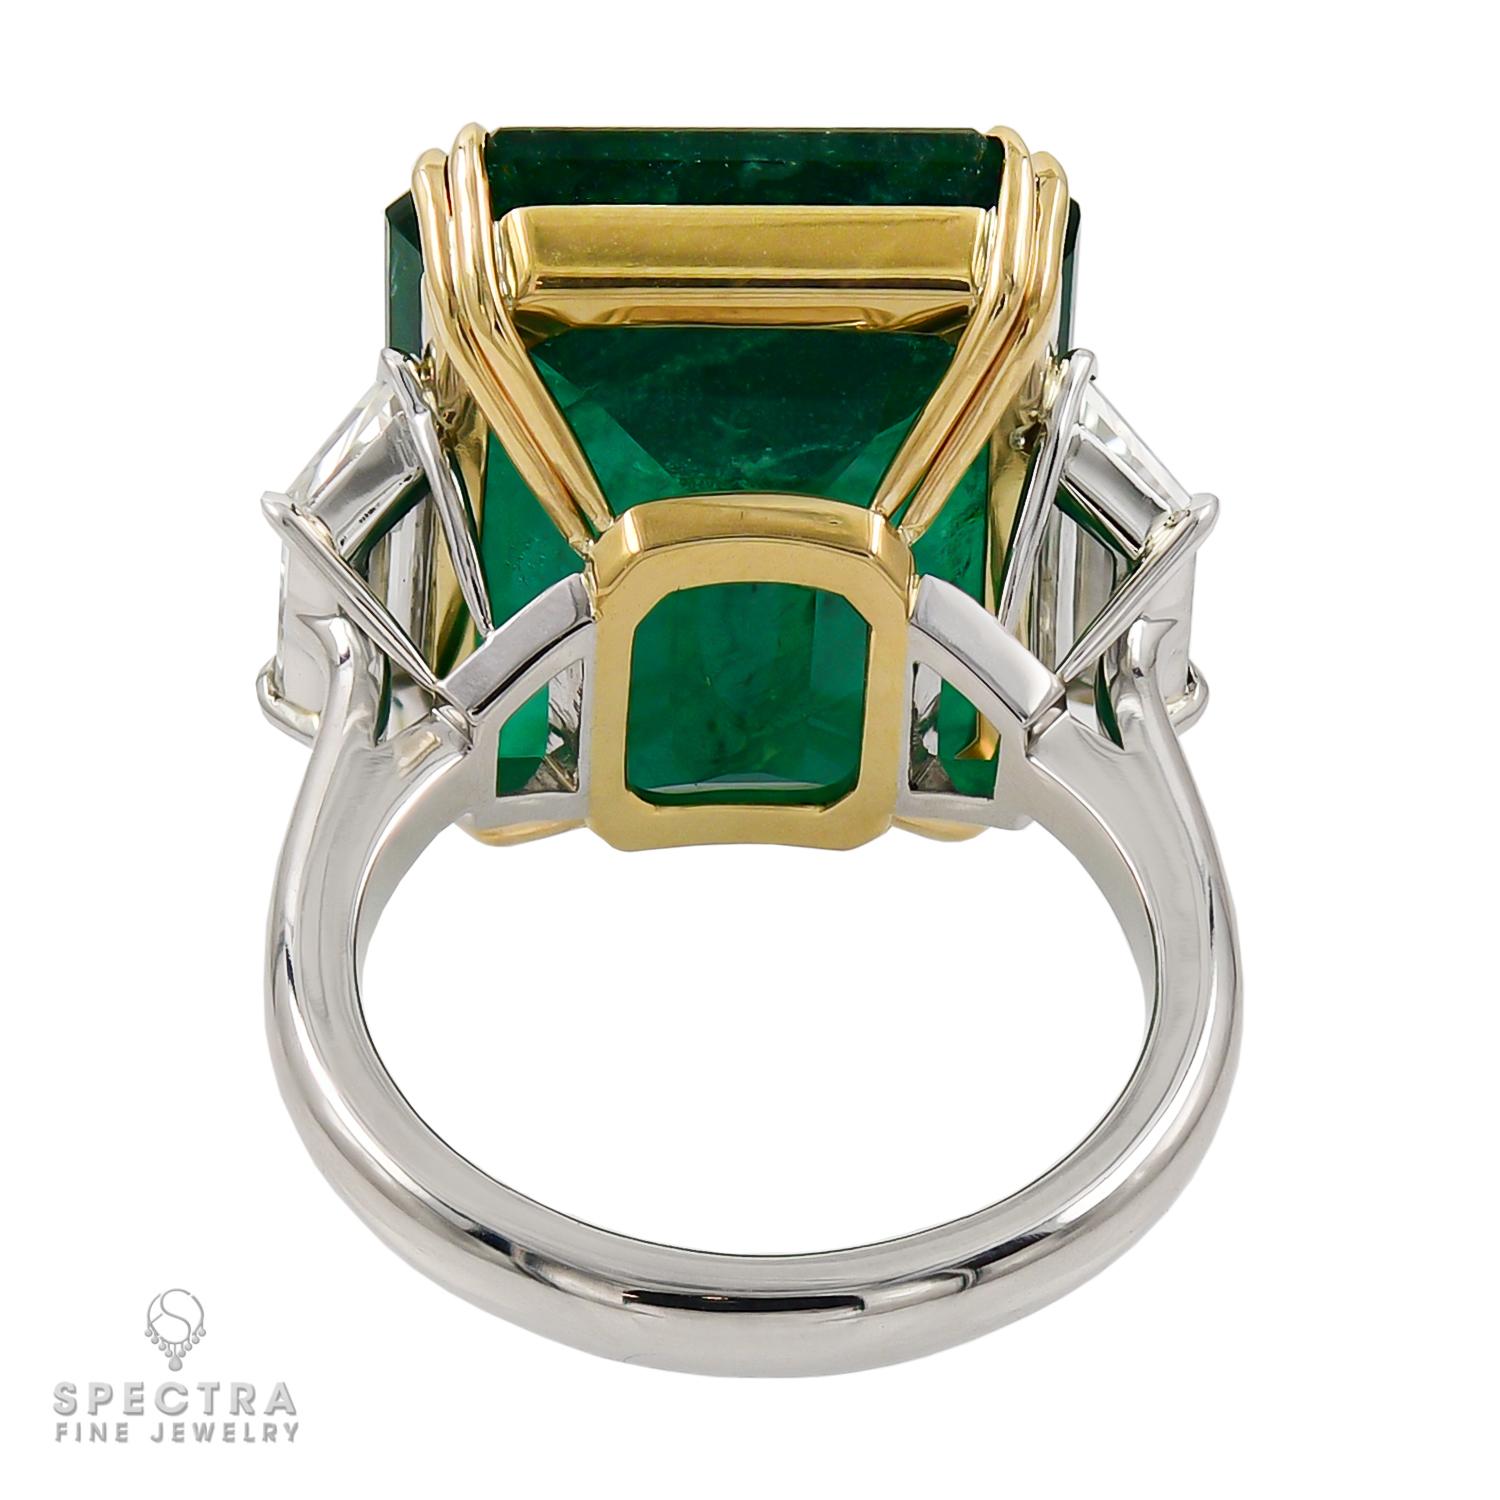 Contemporary Spectra Fine Jewelry Certified 18.38 Carat Zambian Emerald Diamond Ring For Sale